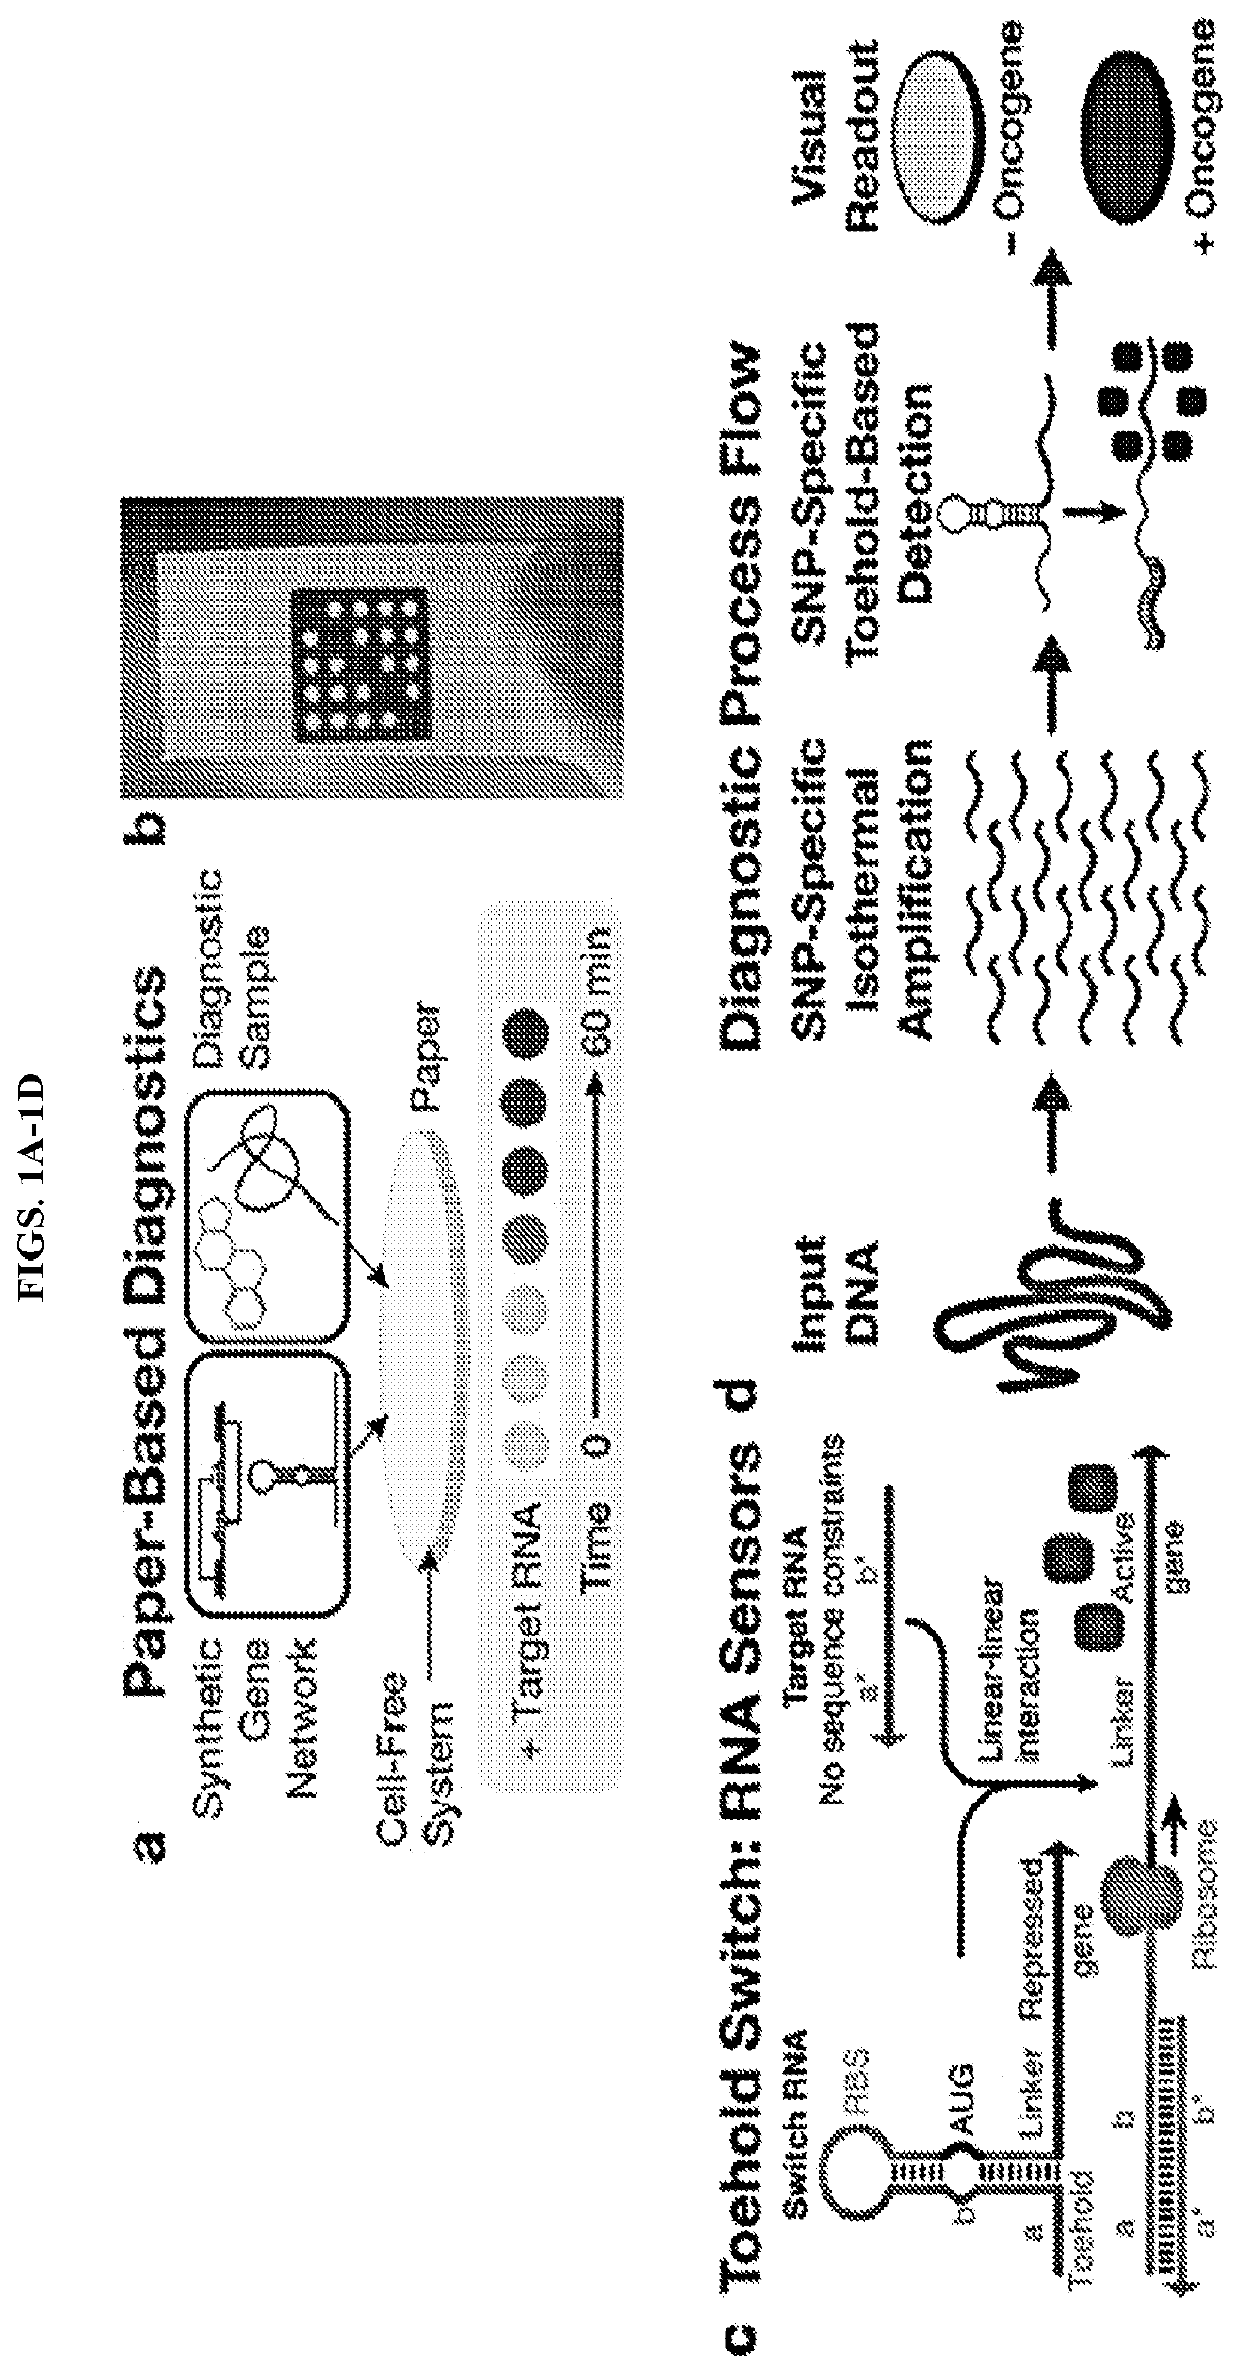 Ultraspecific nucleic acid sensors for low-cost liquid biopsies